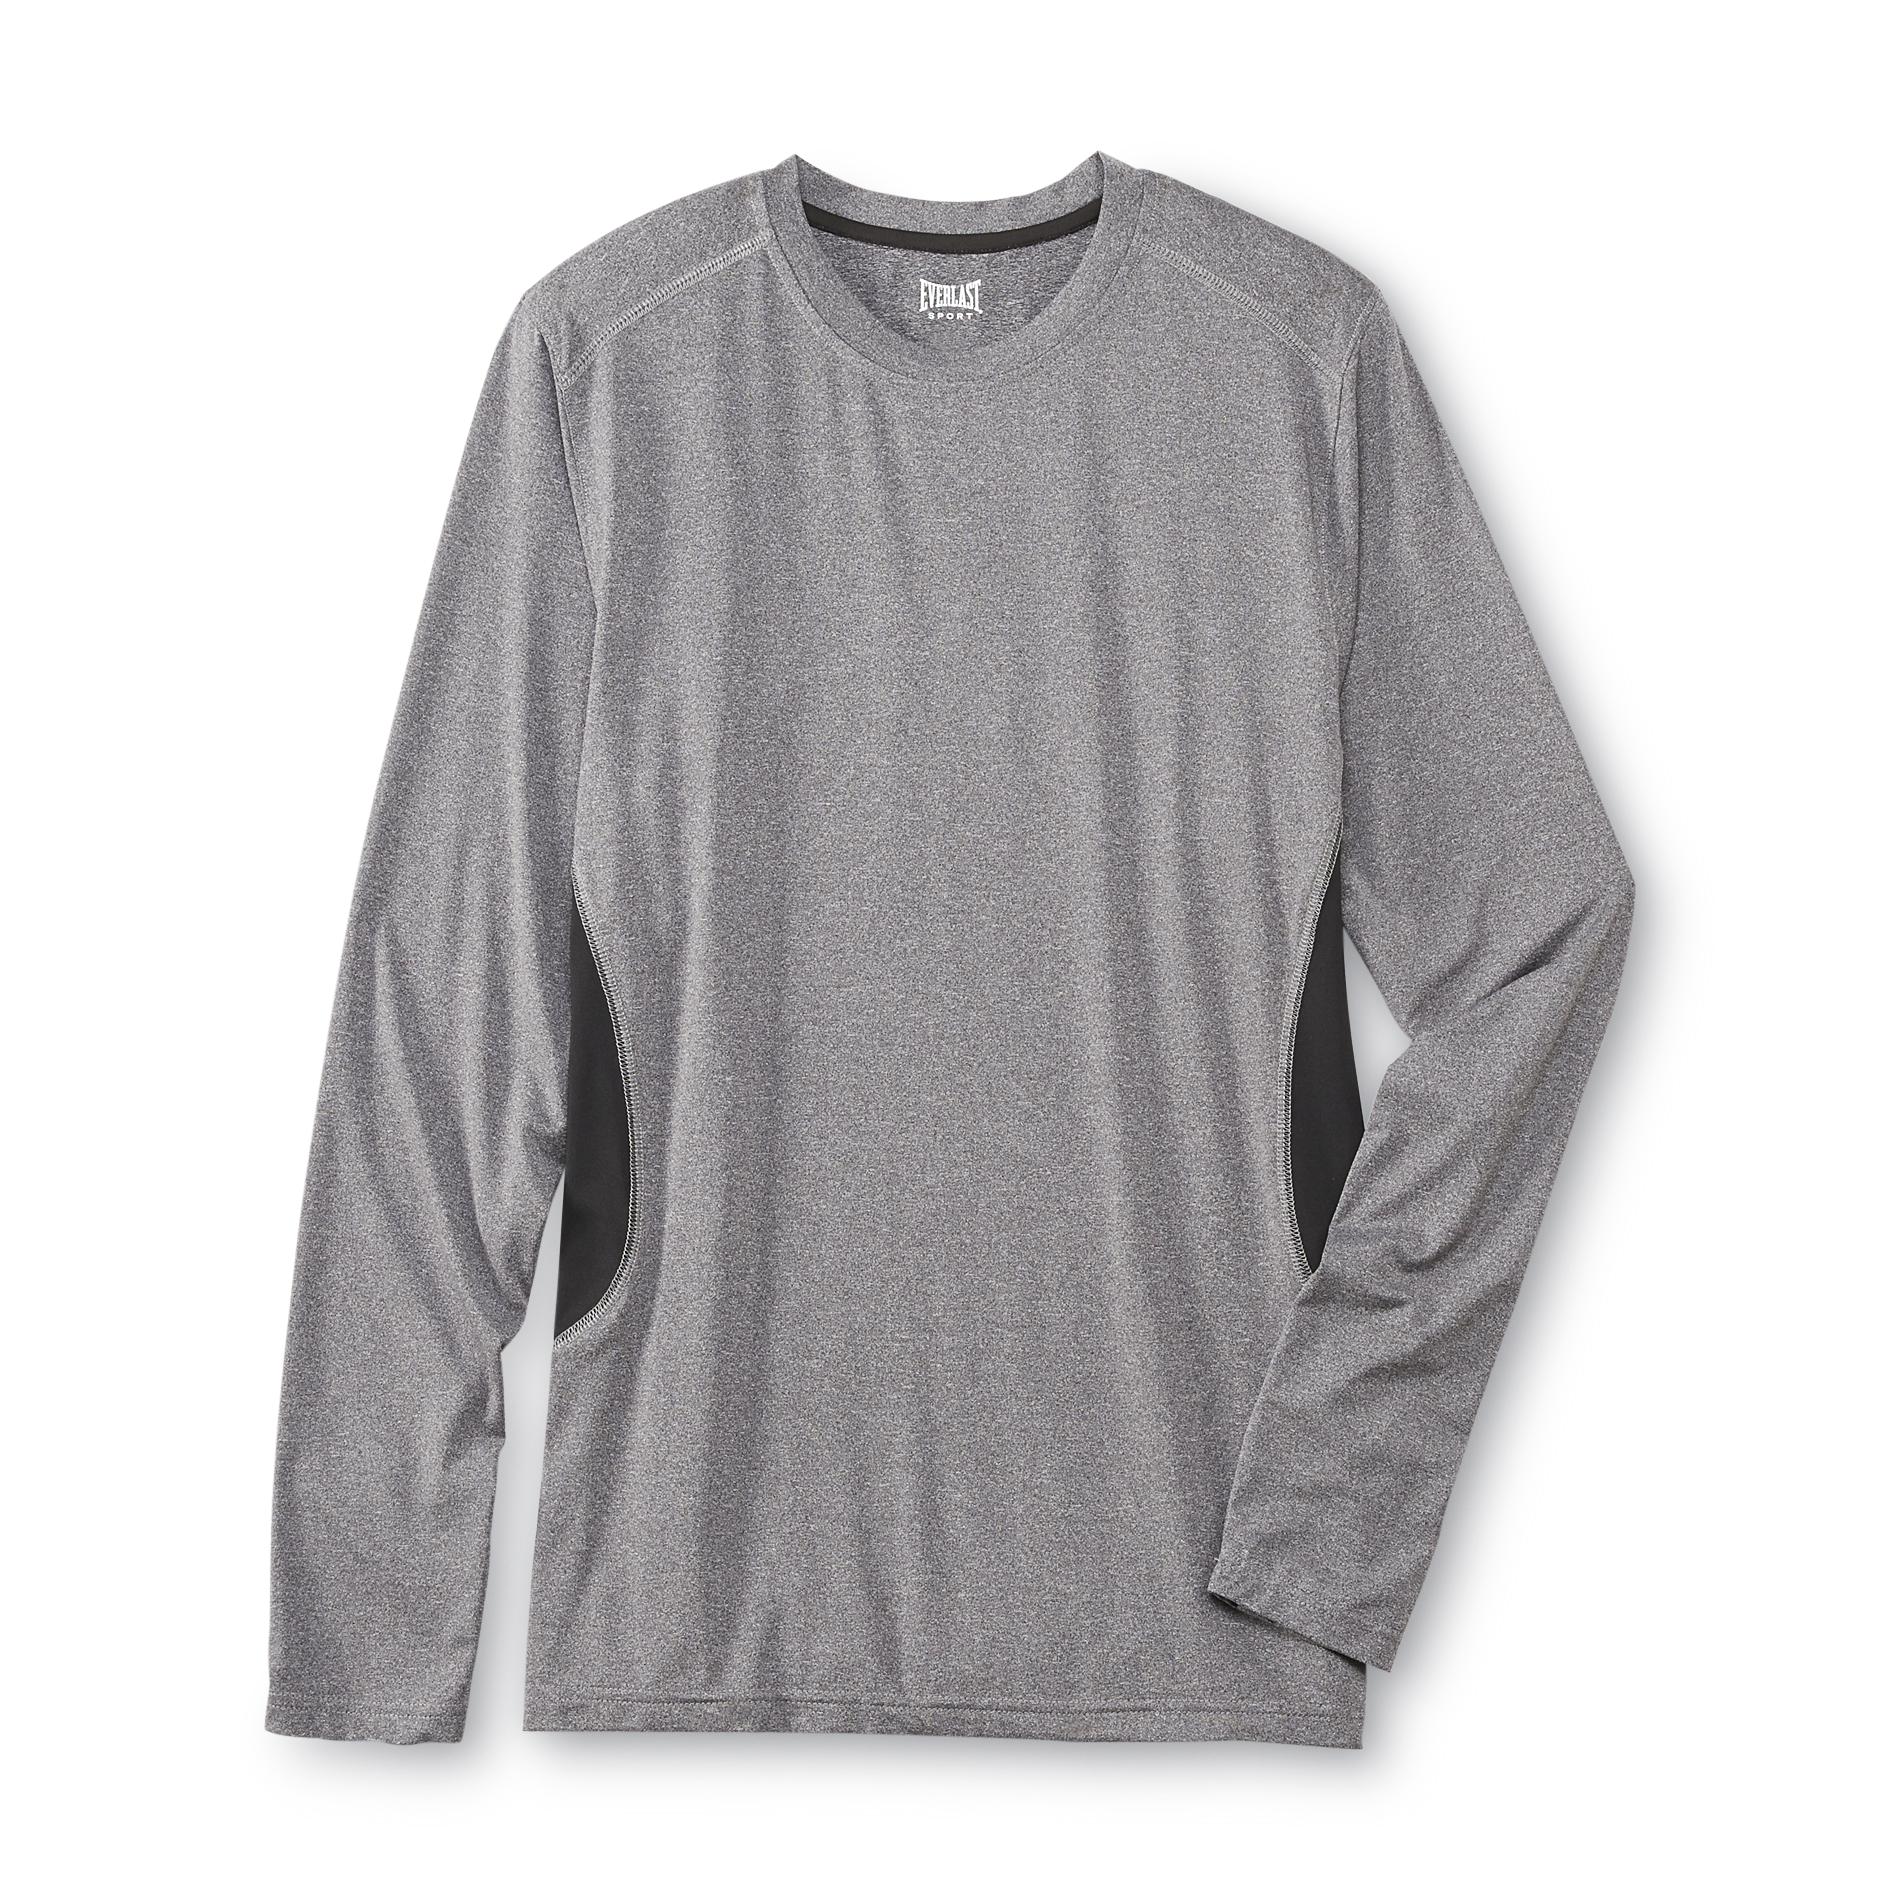 Men's Long-Sleeve Compression Shirt